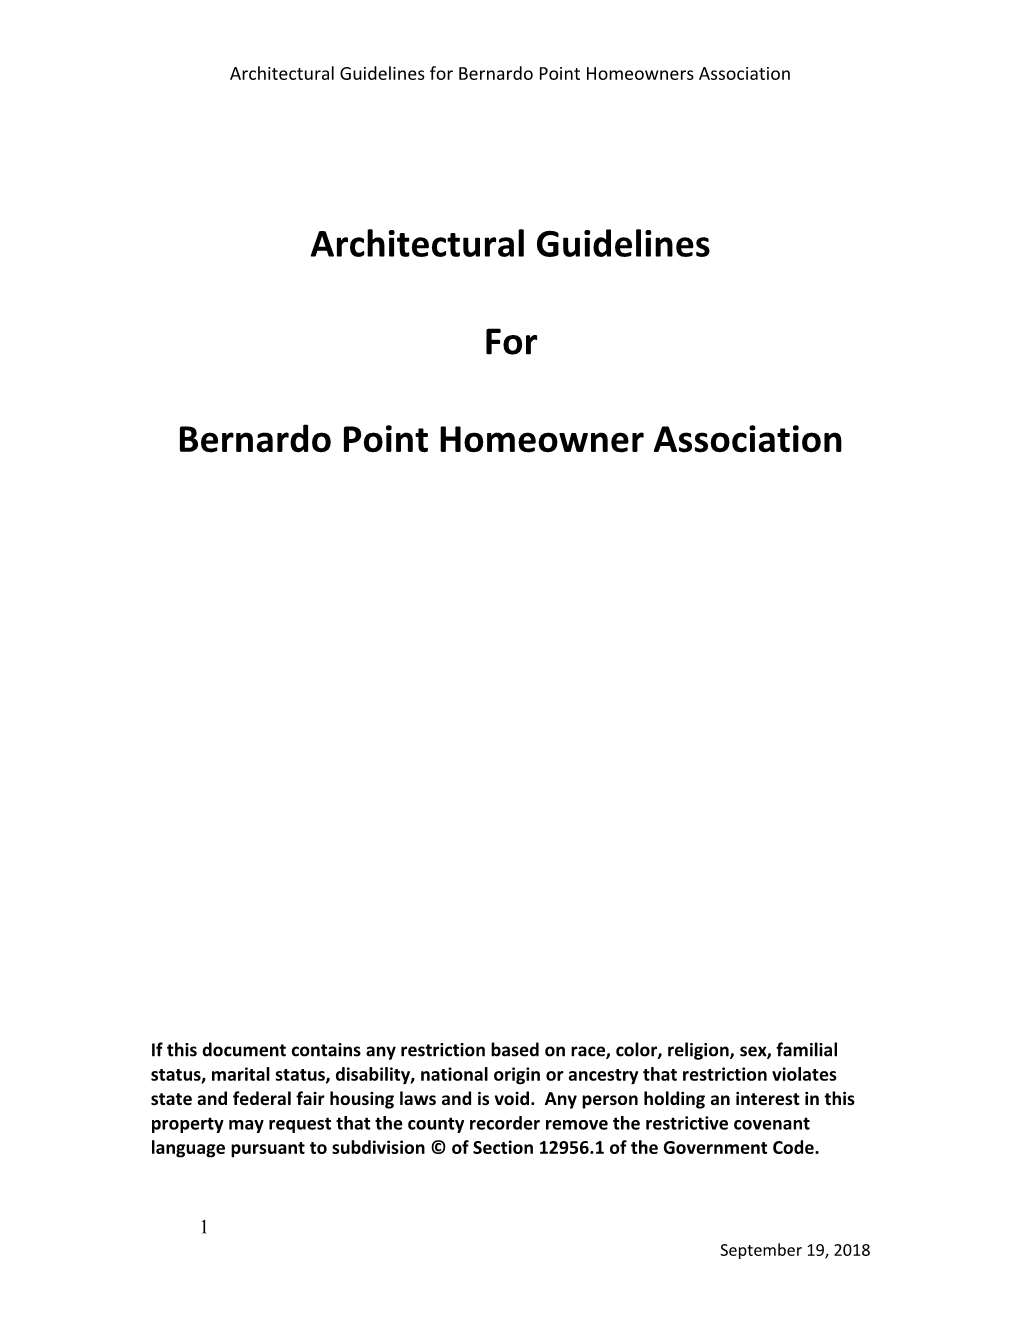 Bernardo Point Homeowners Association